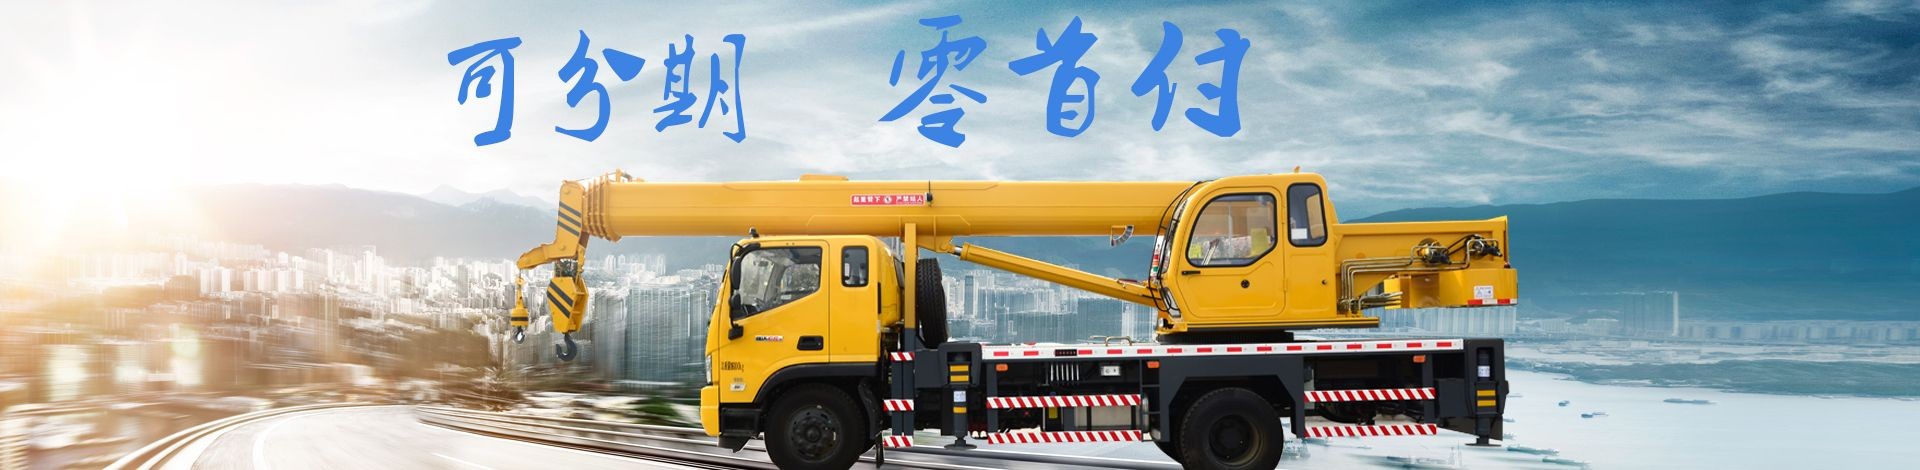 Shandong Guihe Construction Machinery Co., Ltd.